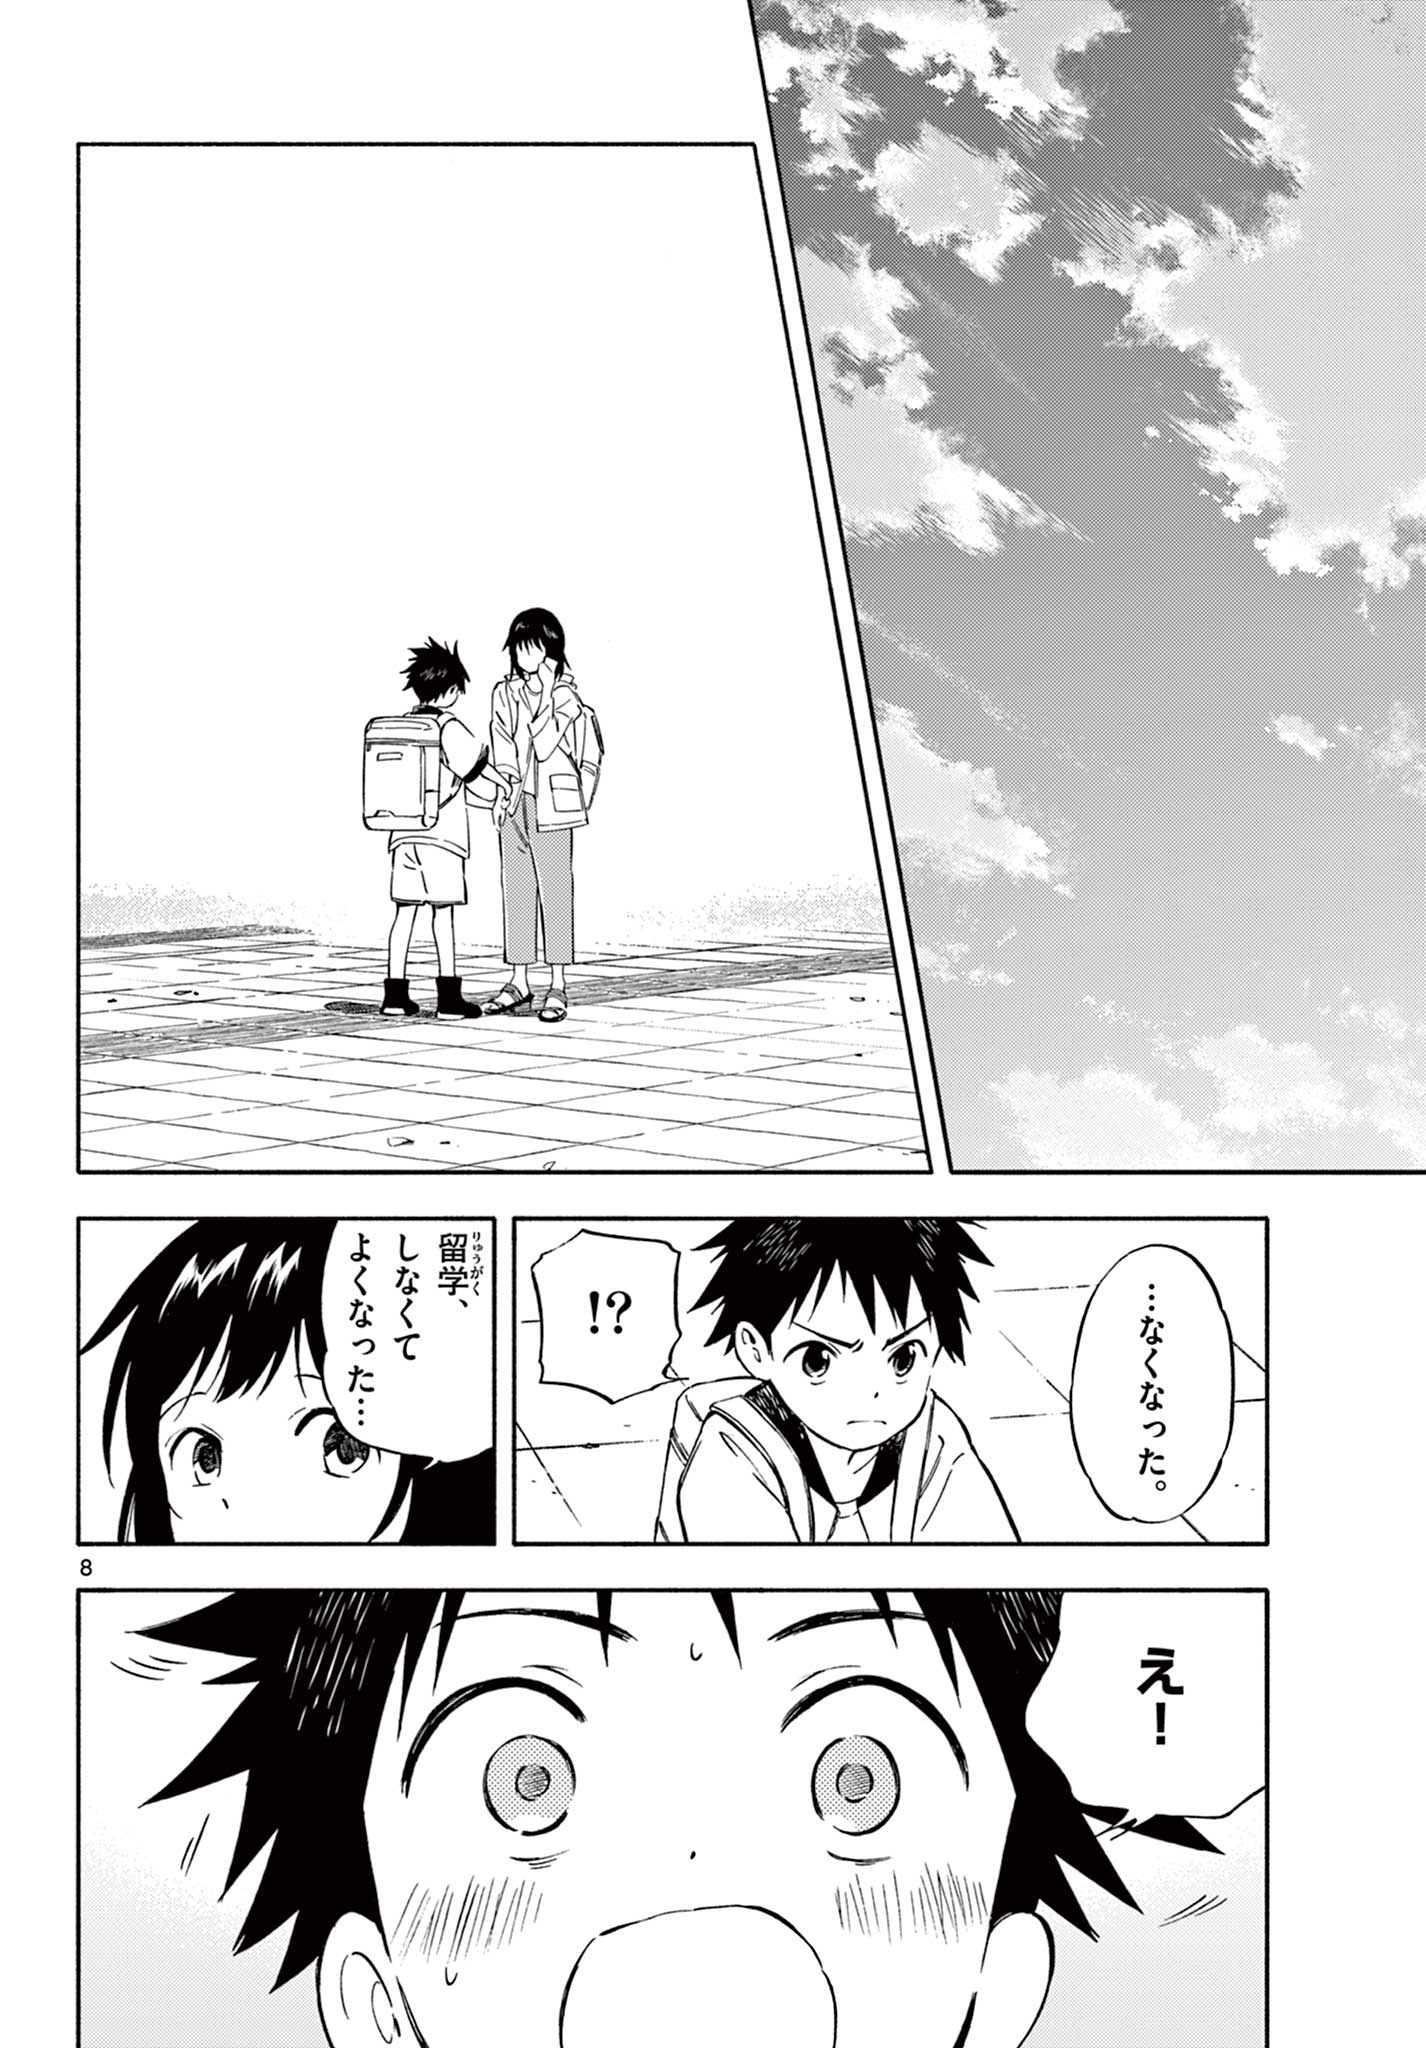 Nami no Shijima no Horizont - Chapter 14.1 - Page 8